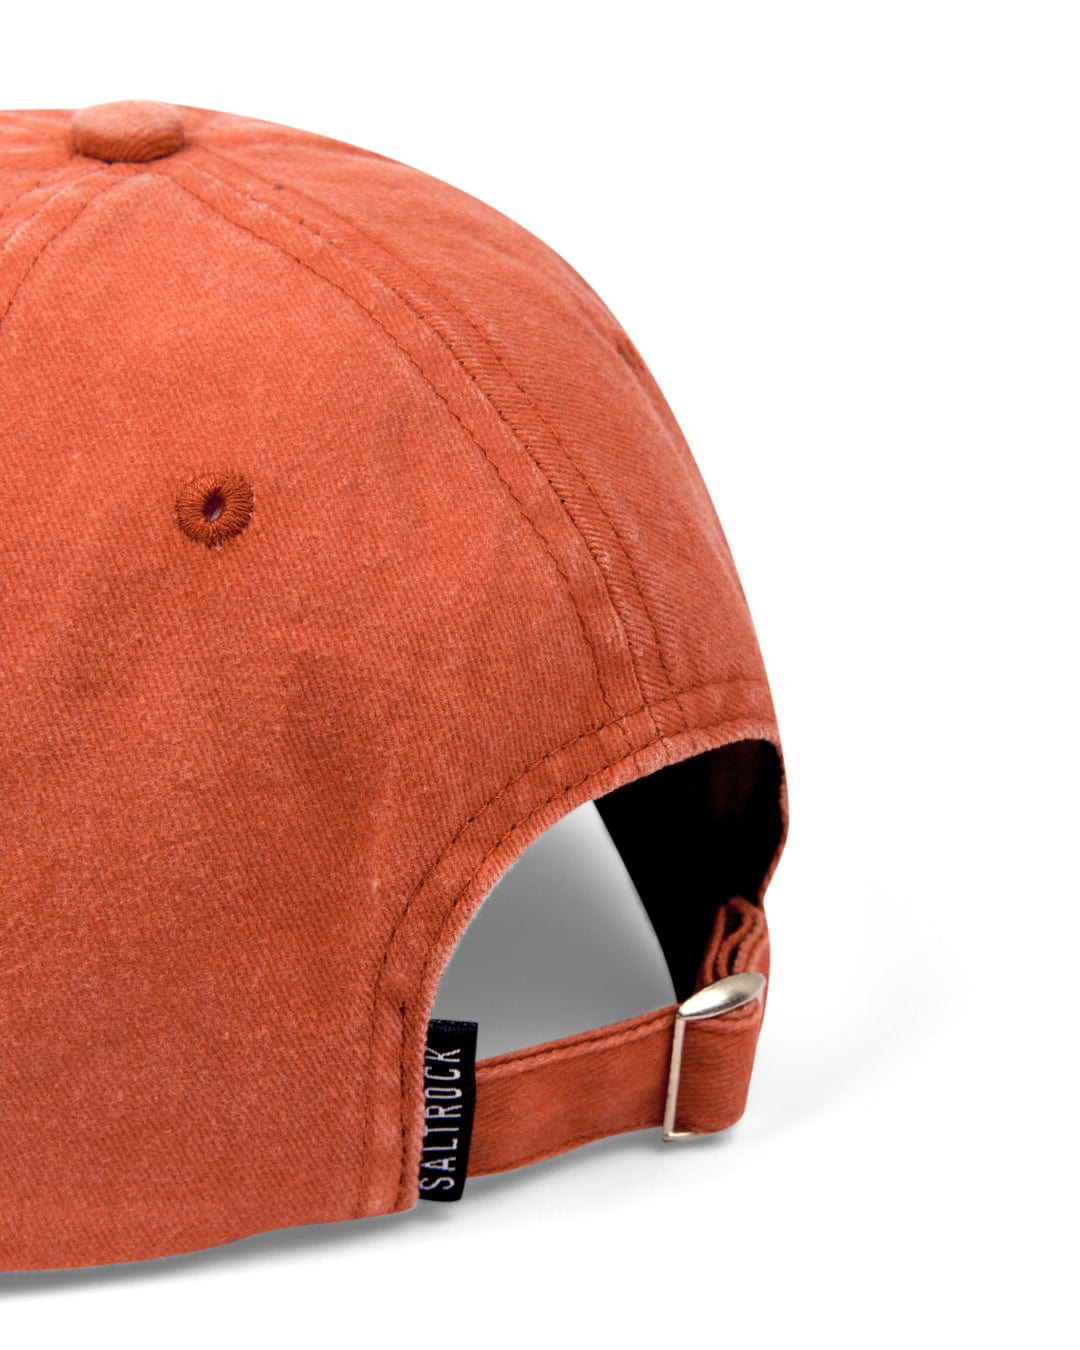 Close-up of a Burnt Orange SR Original Cap with an adjustable strap and a Saltrock branded badge visible.